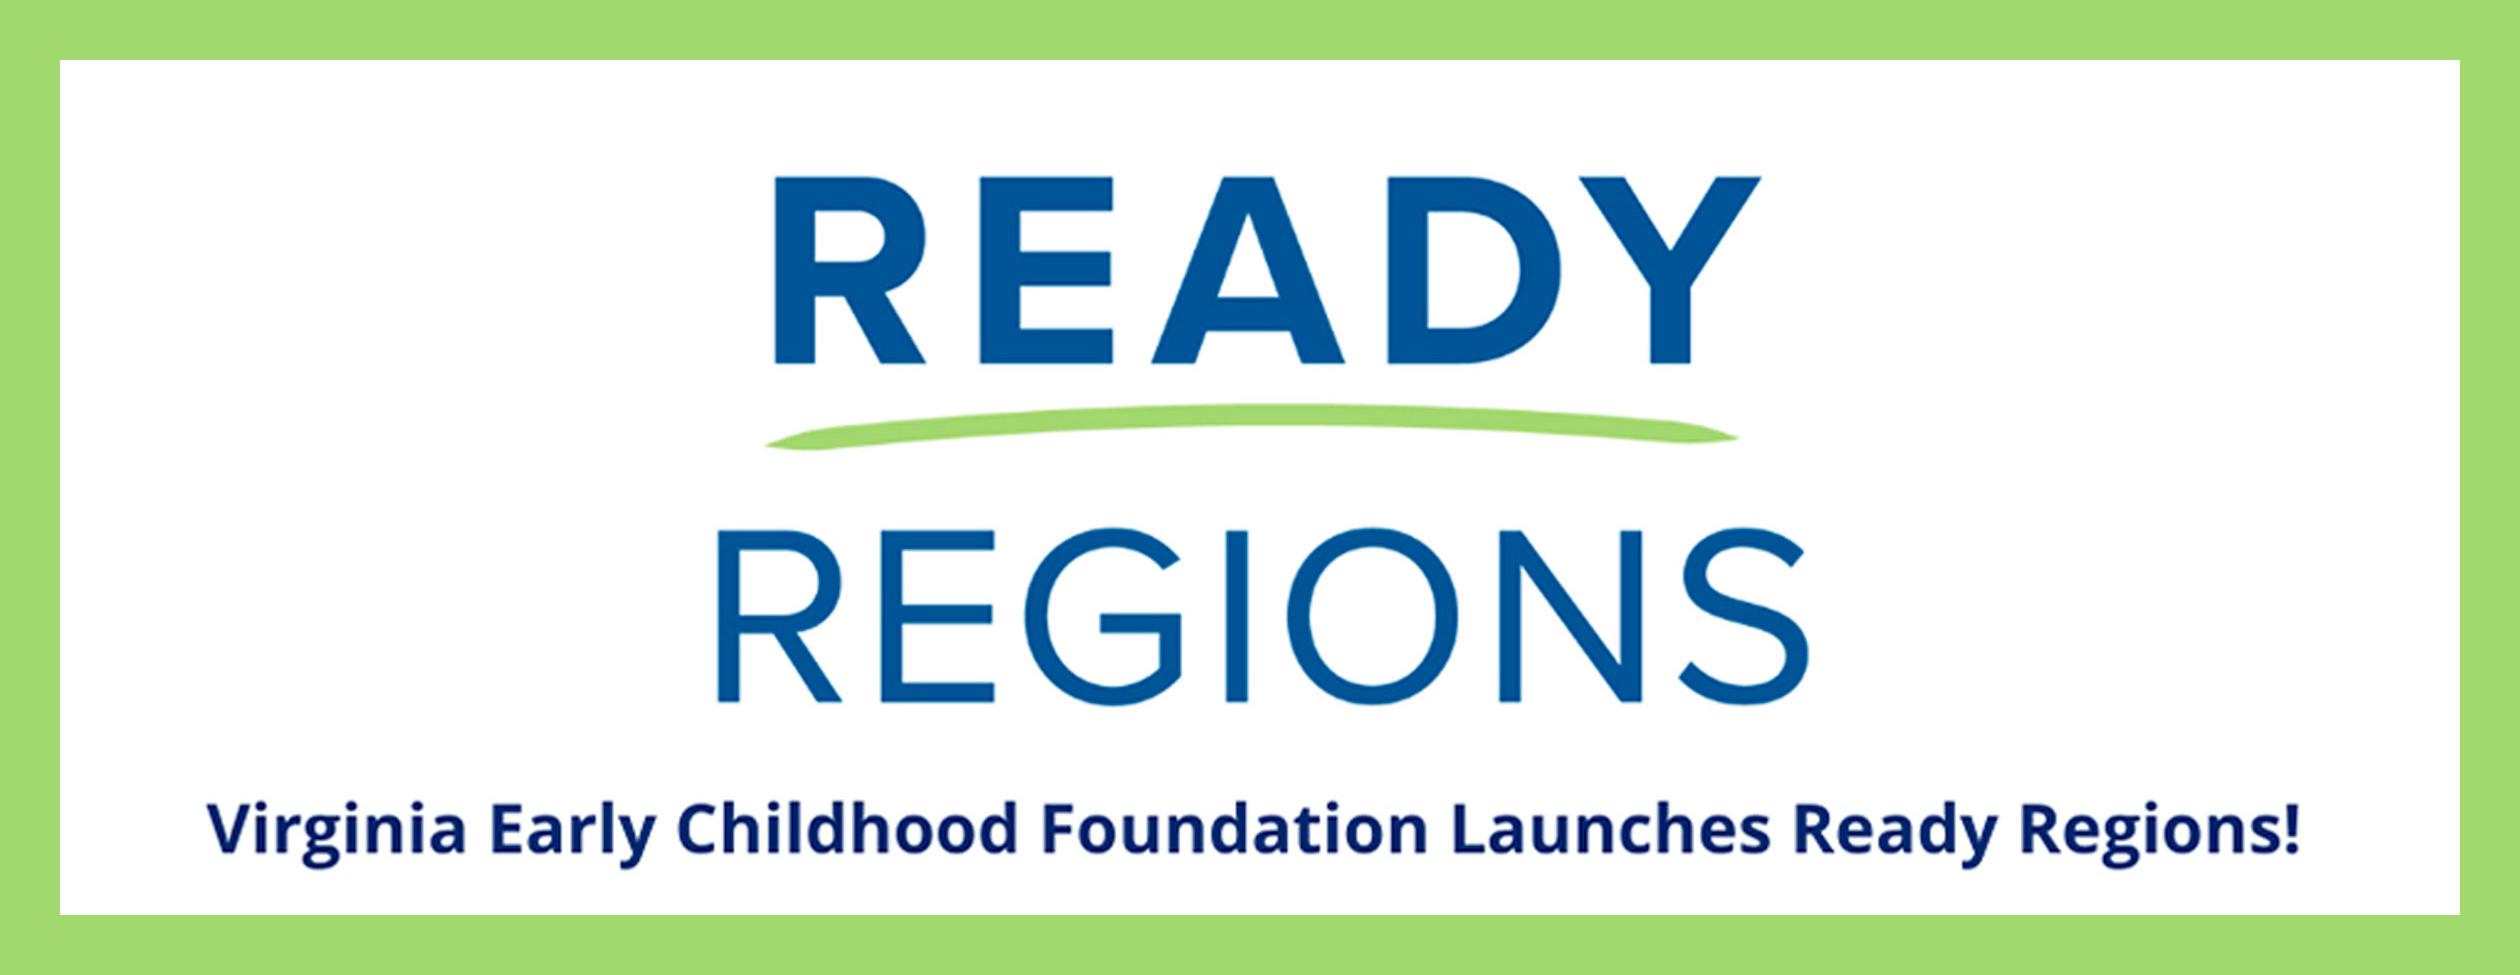 Ready Regions Launch